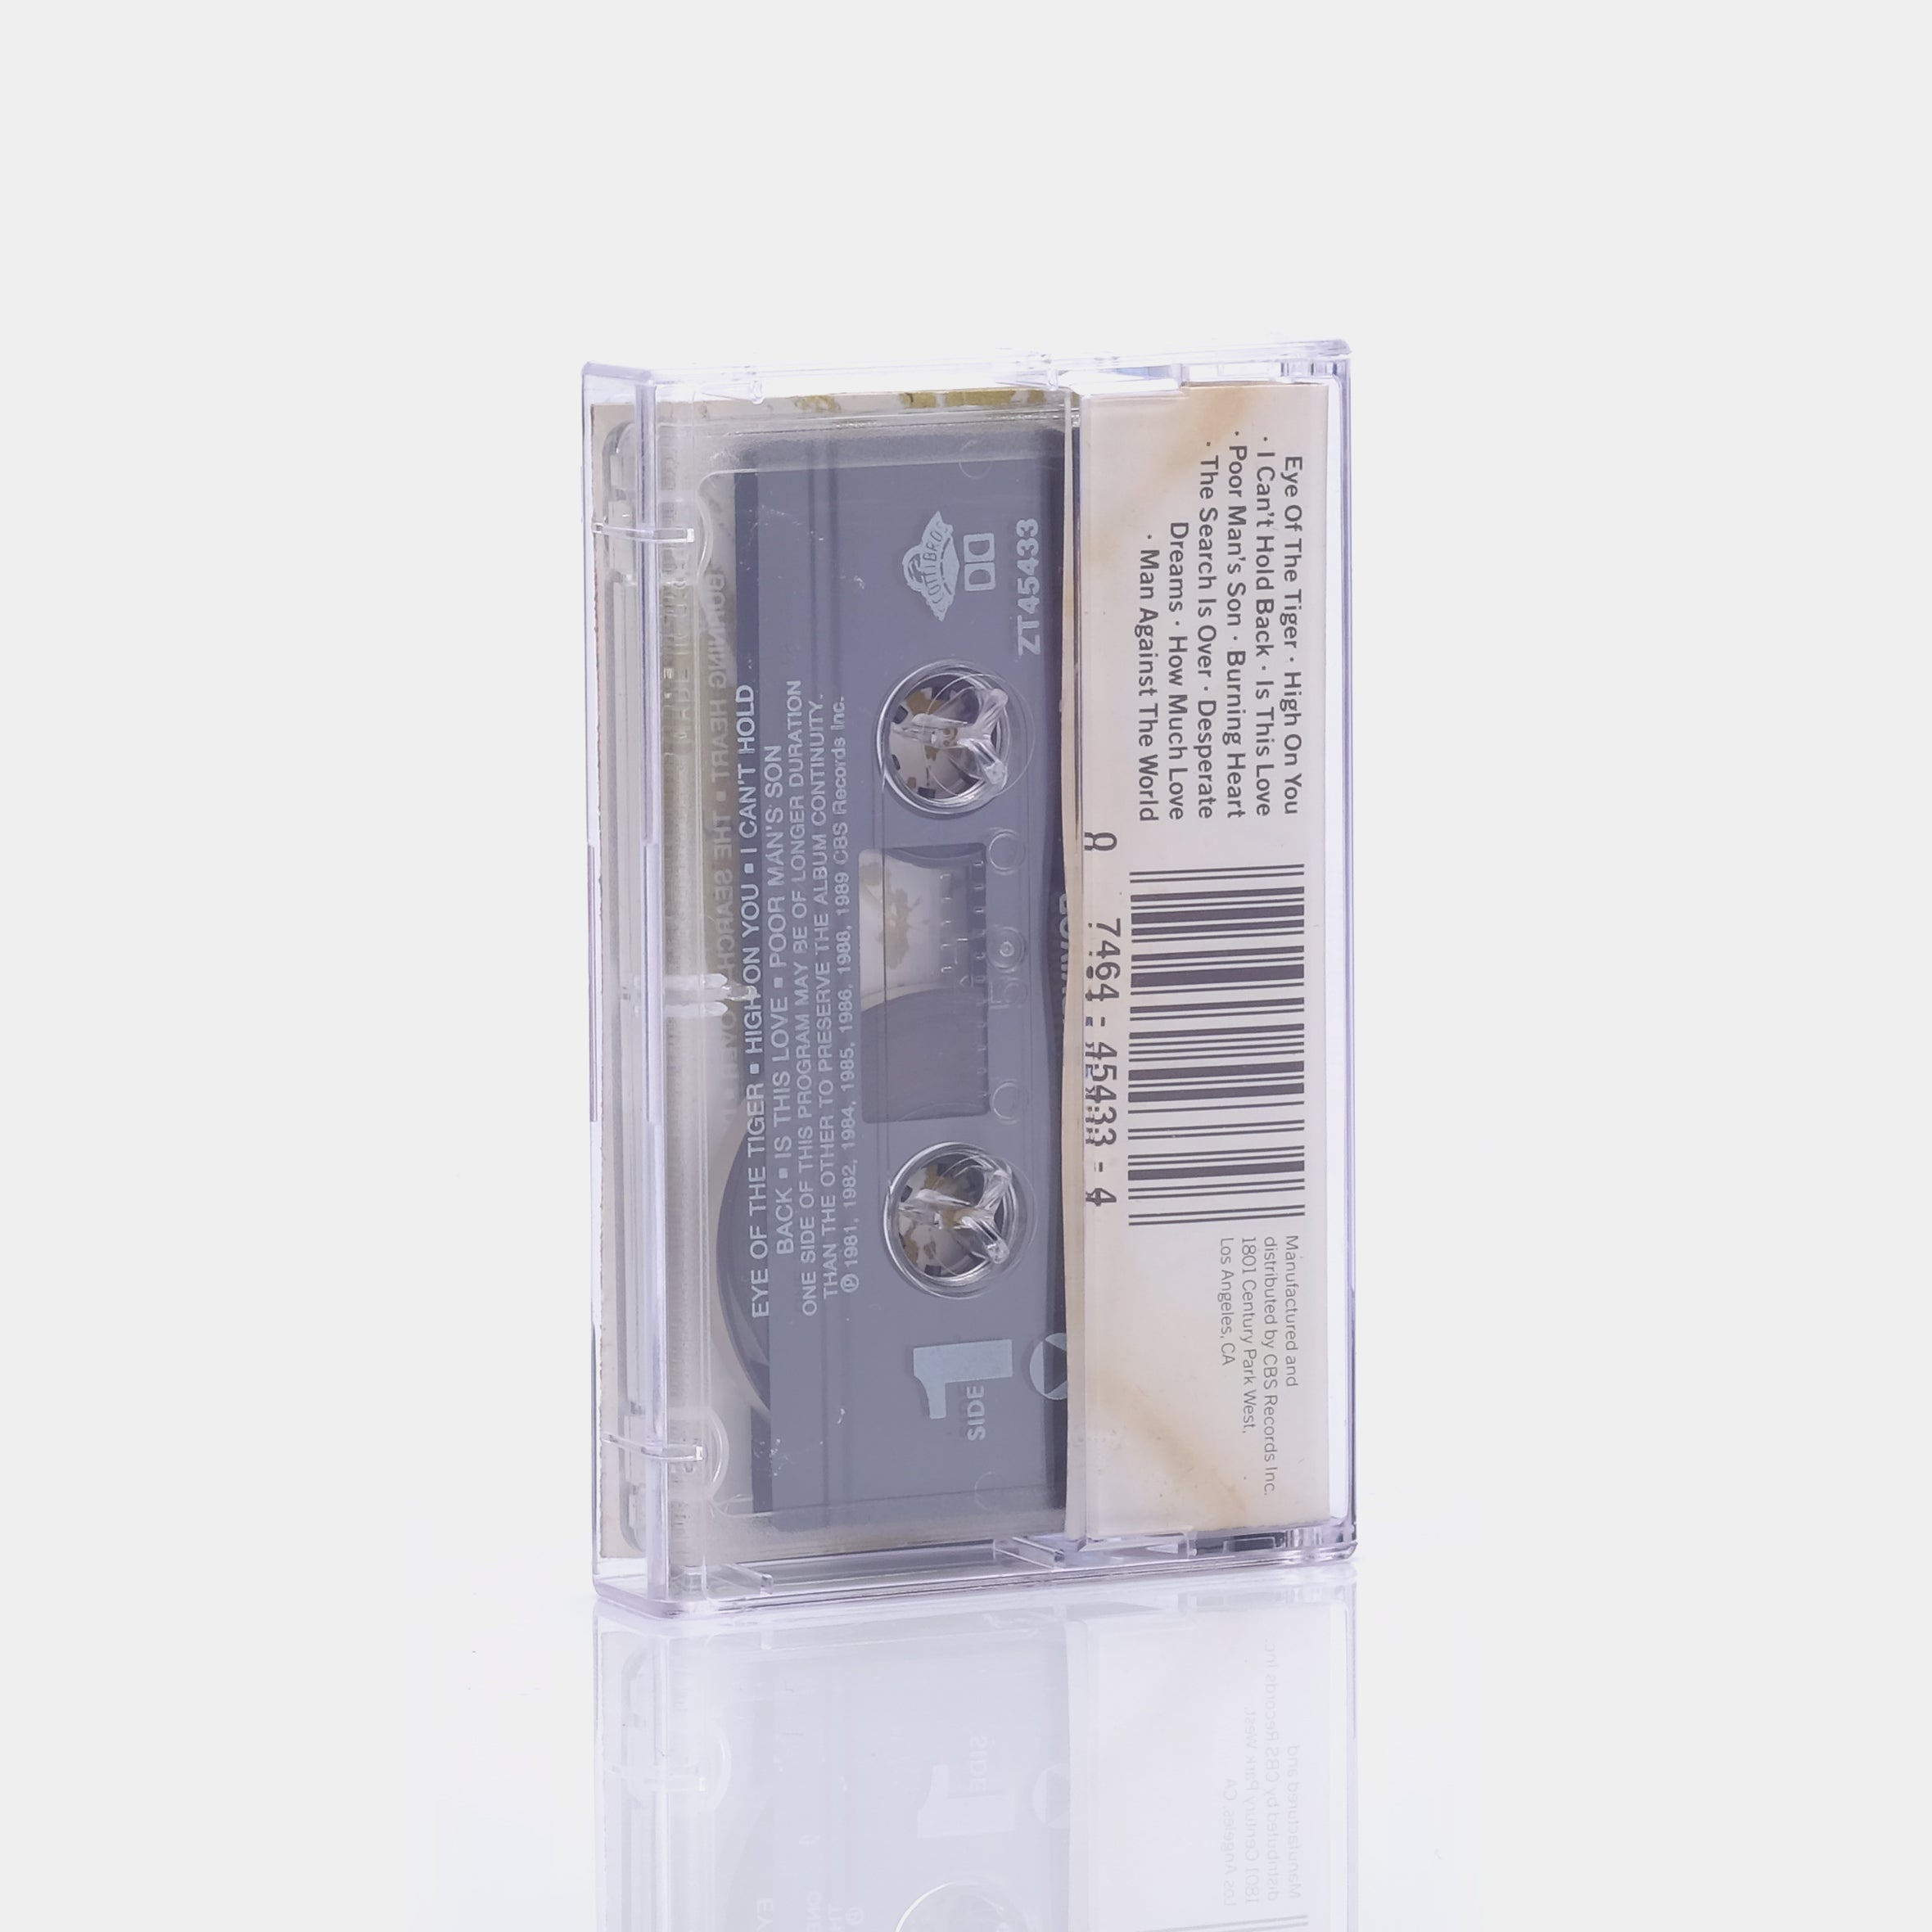 Survivor - Greatest Hits Cassette Tape